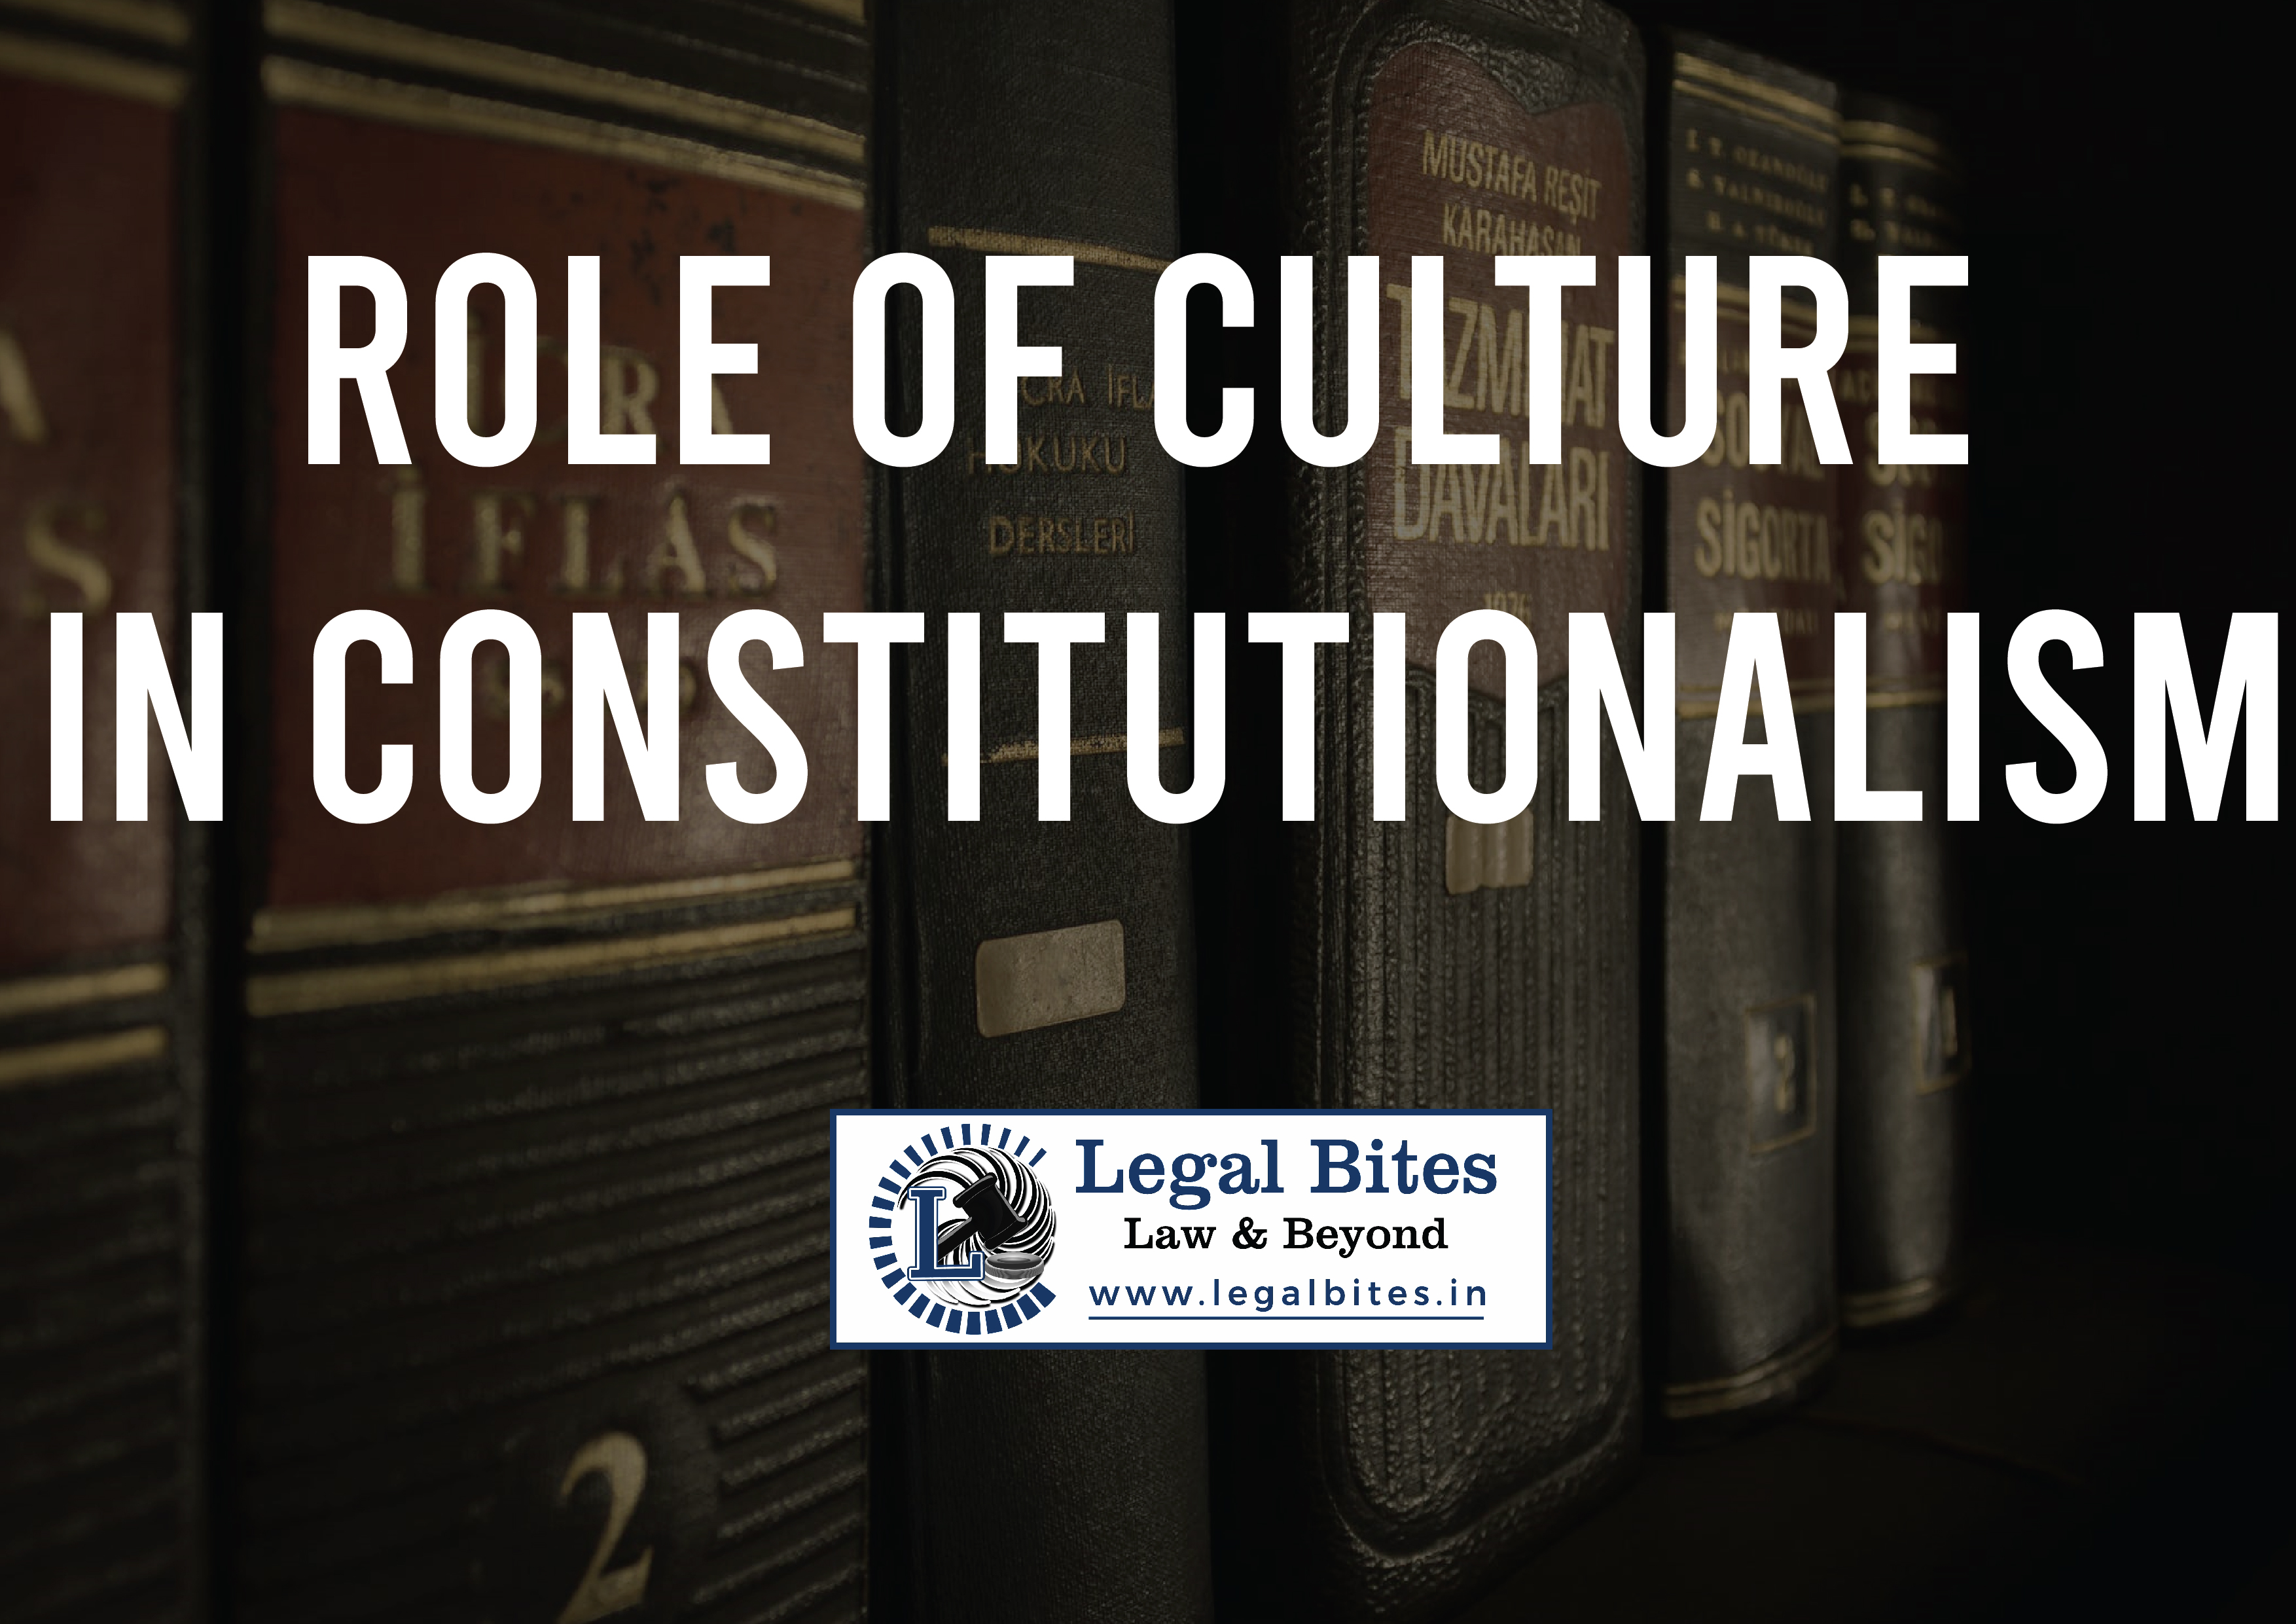 Role of Culture in Constitutionalism